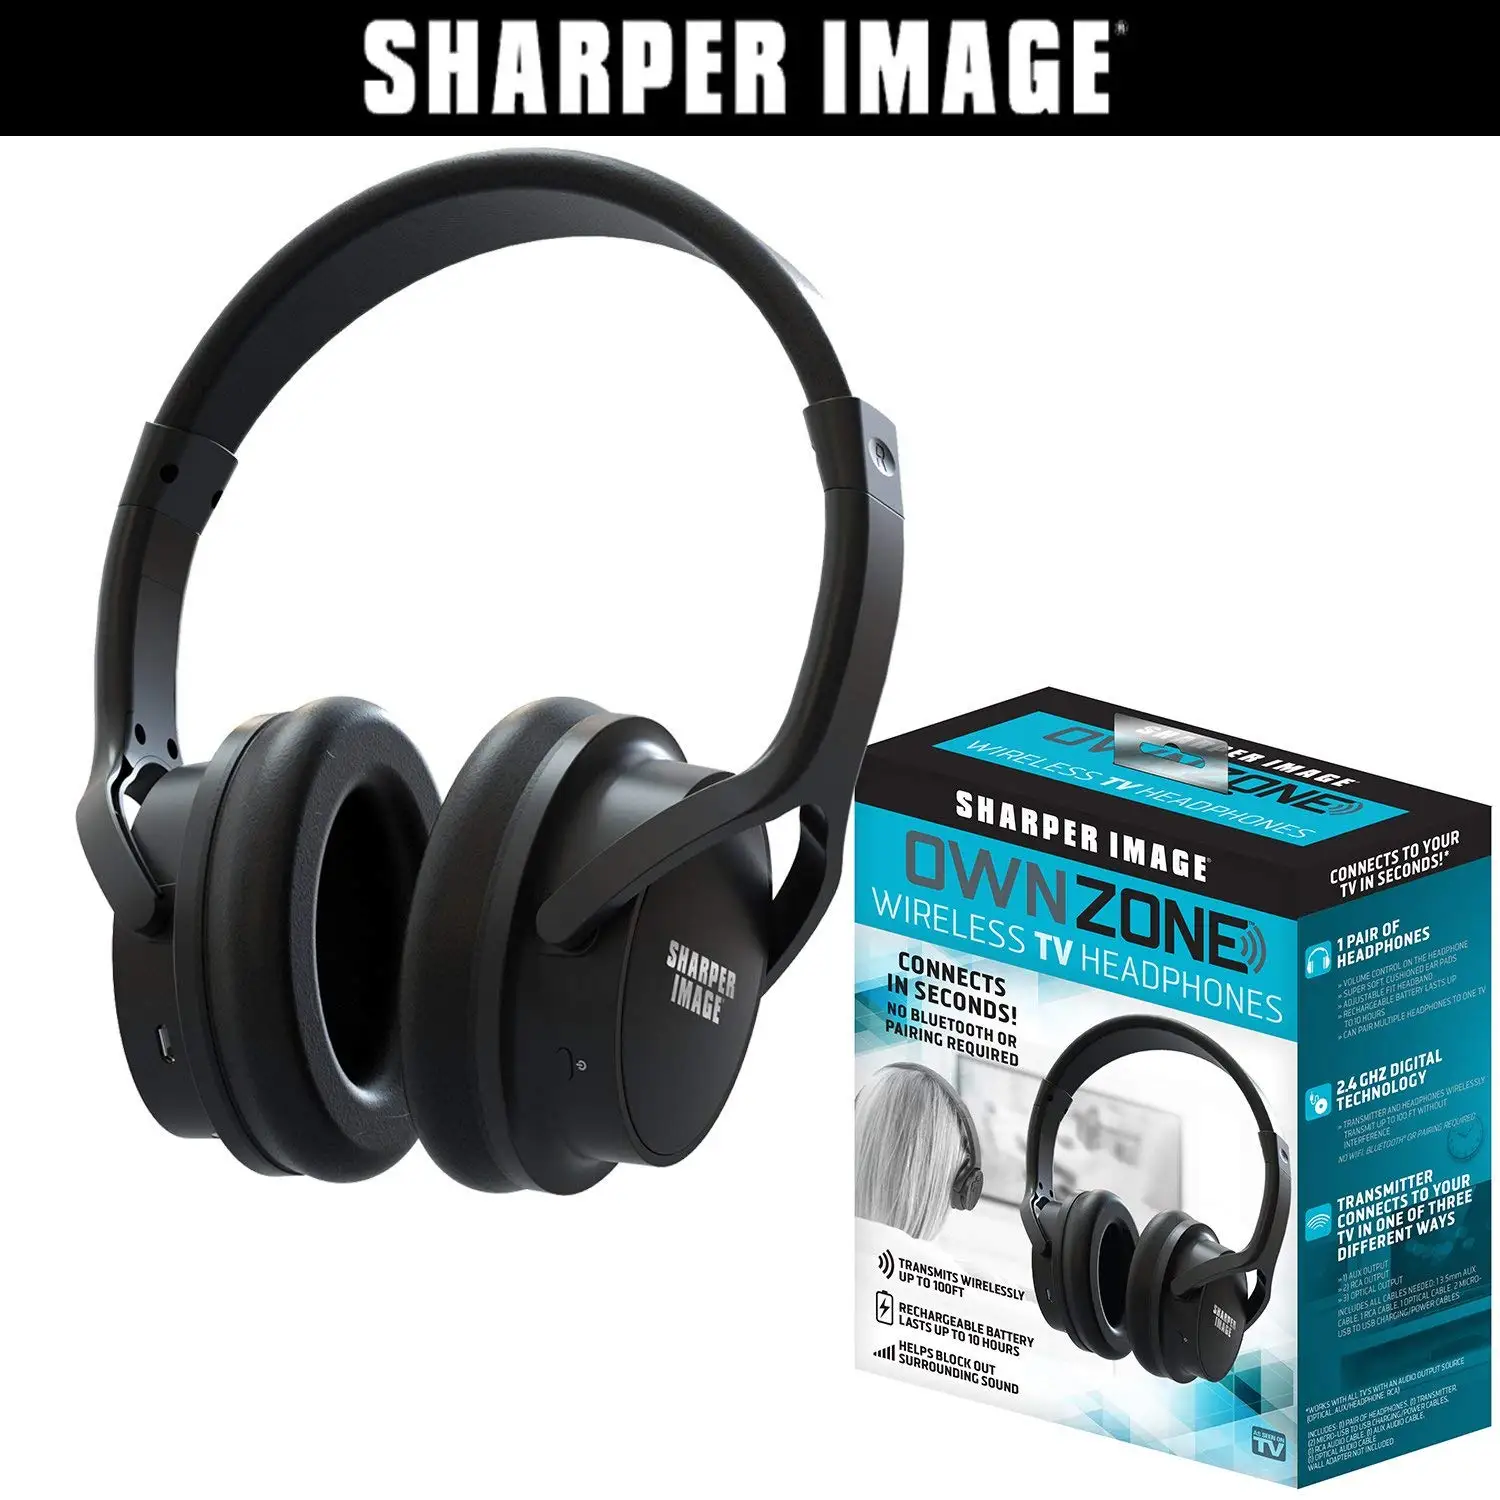 Sharper image tv headphones reviews